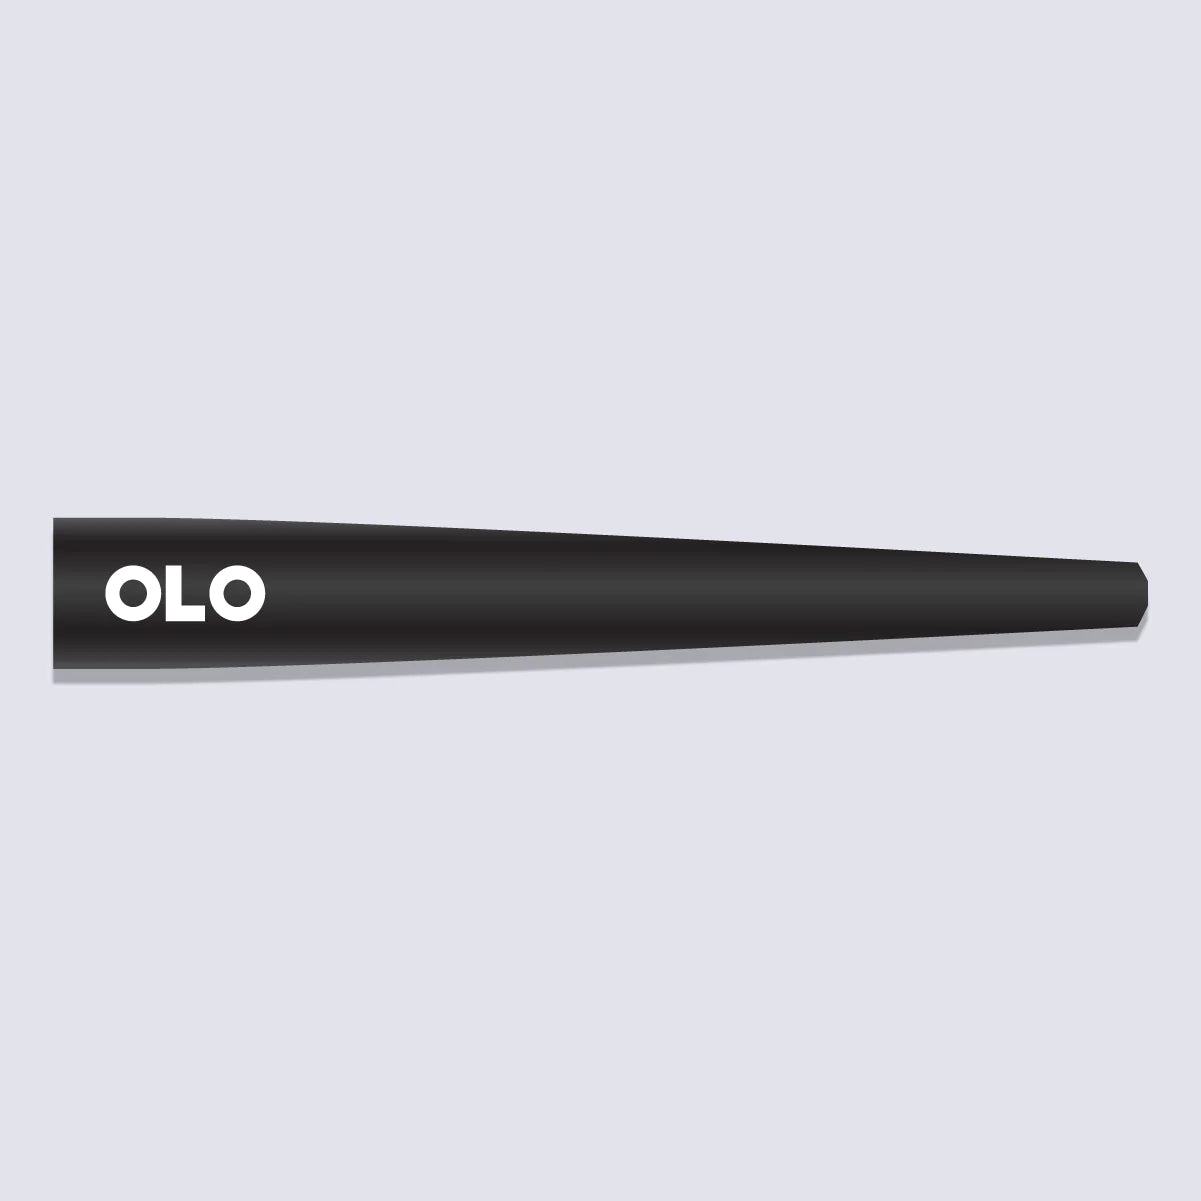 OLO Brush Handle - Black, 2 pack